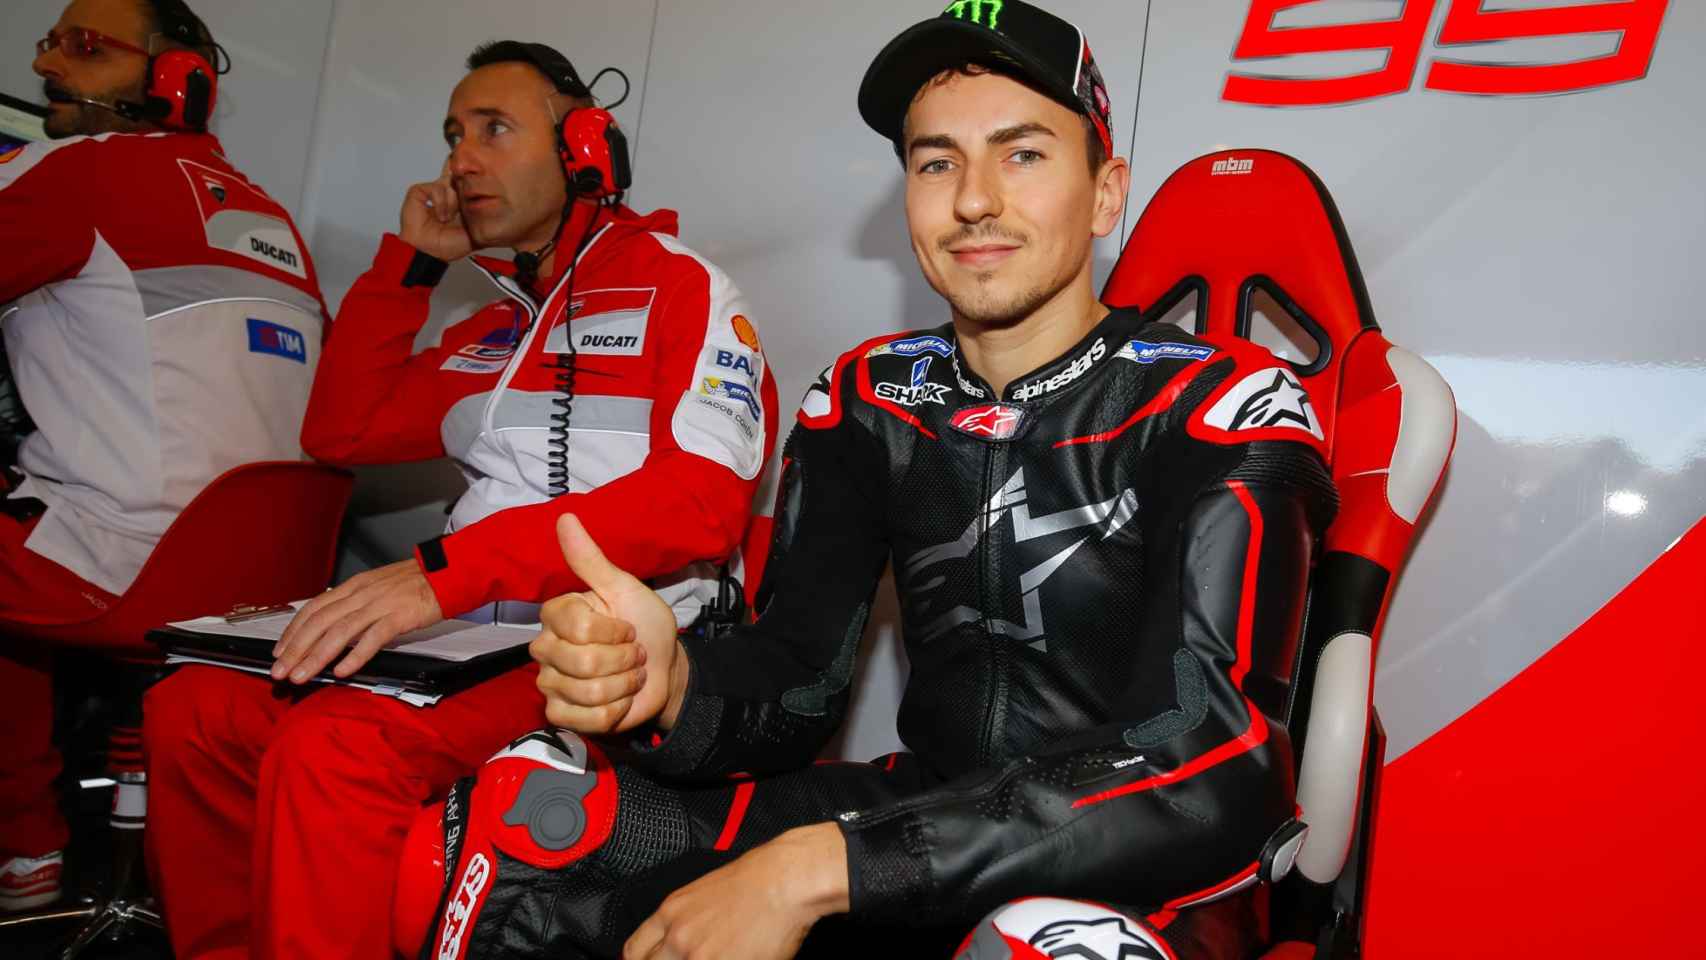 Jorge Lorenzo, en el box de Ducati.